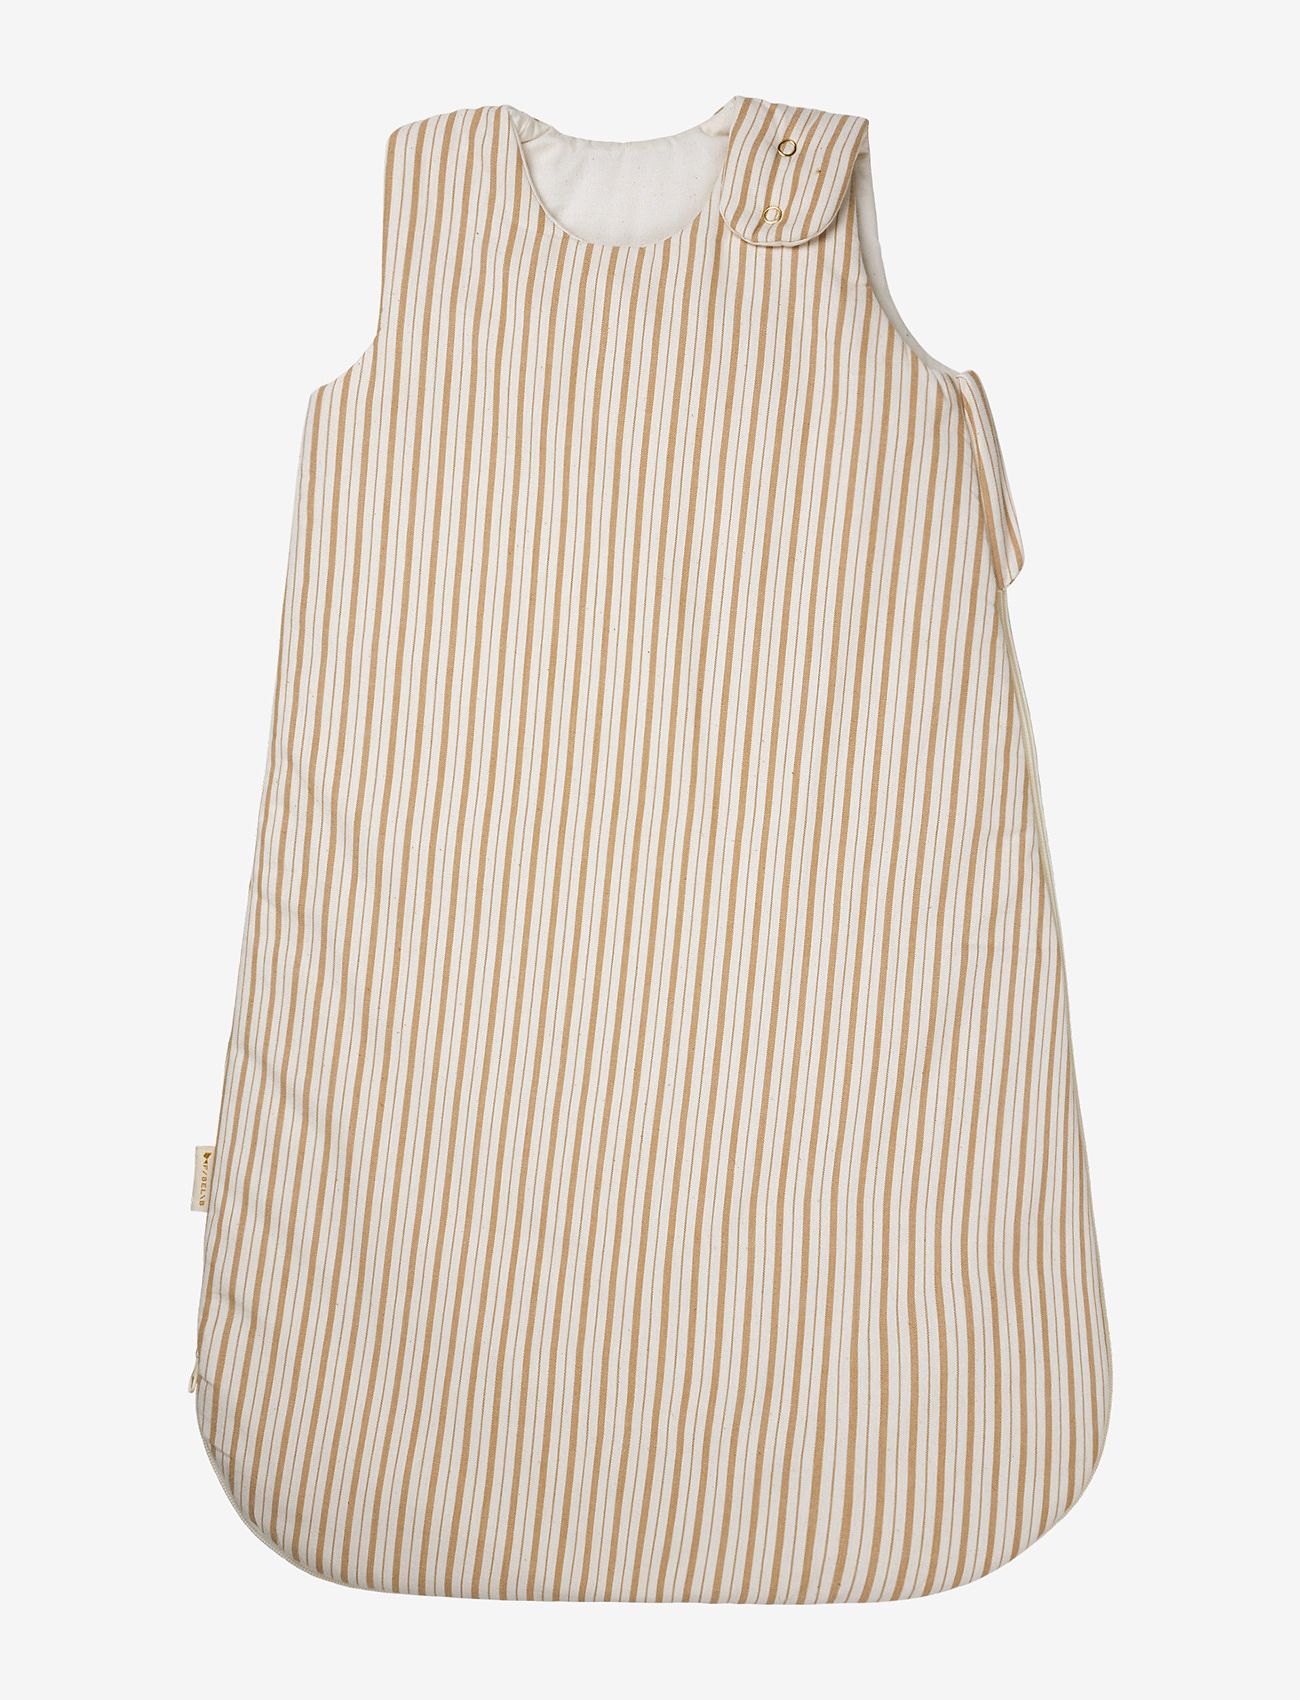 Fabelab - Sleeping bag - Caramel Stripes 0-6M - lowest prices - natural - 0